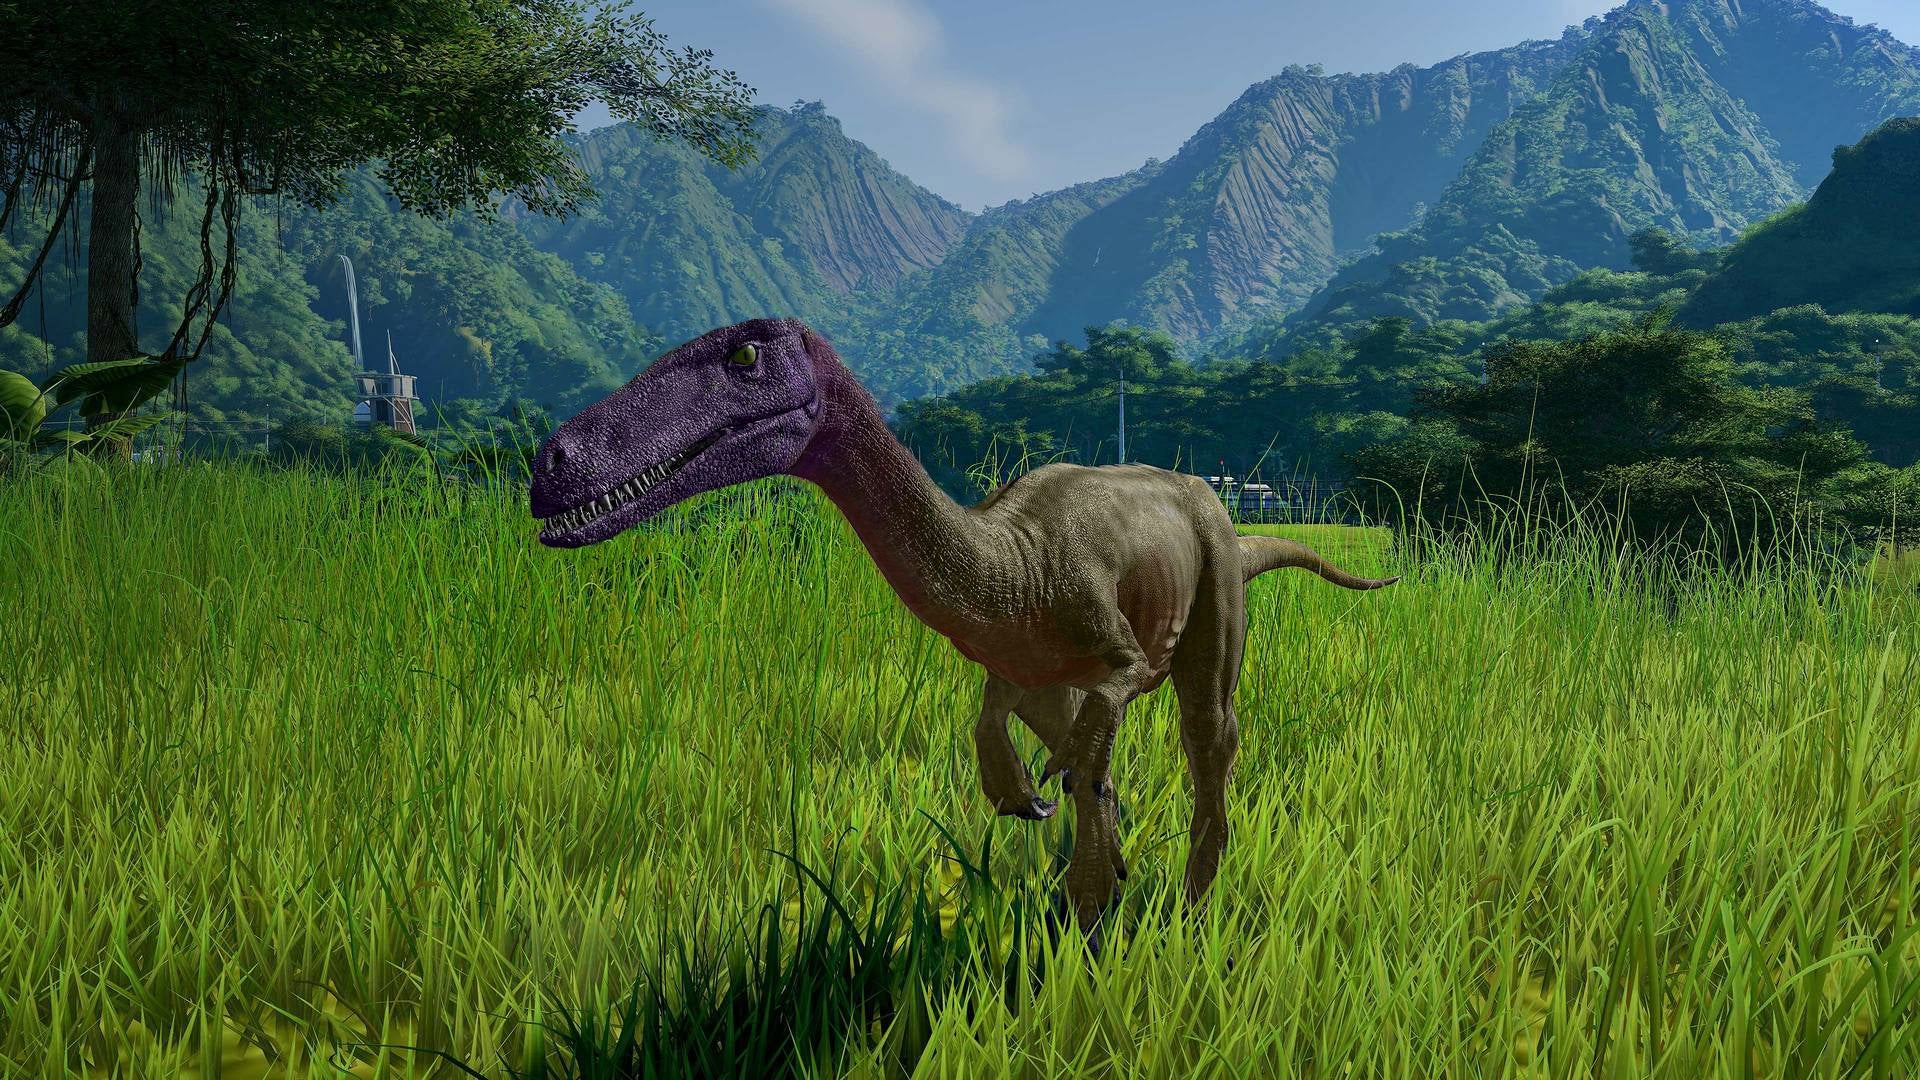 My first new dinosaur edit that isn't just a reskin, the Coelophysis: jurassicworldevo